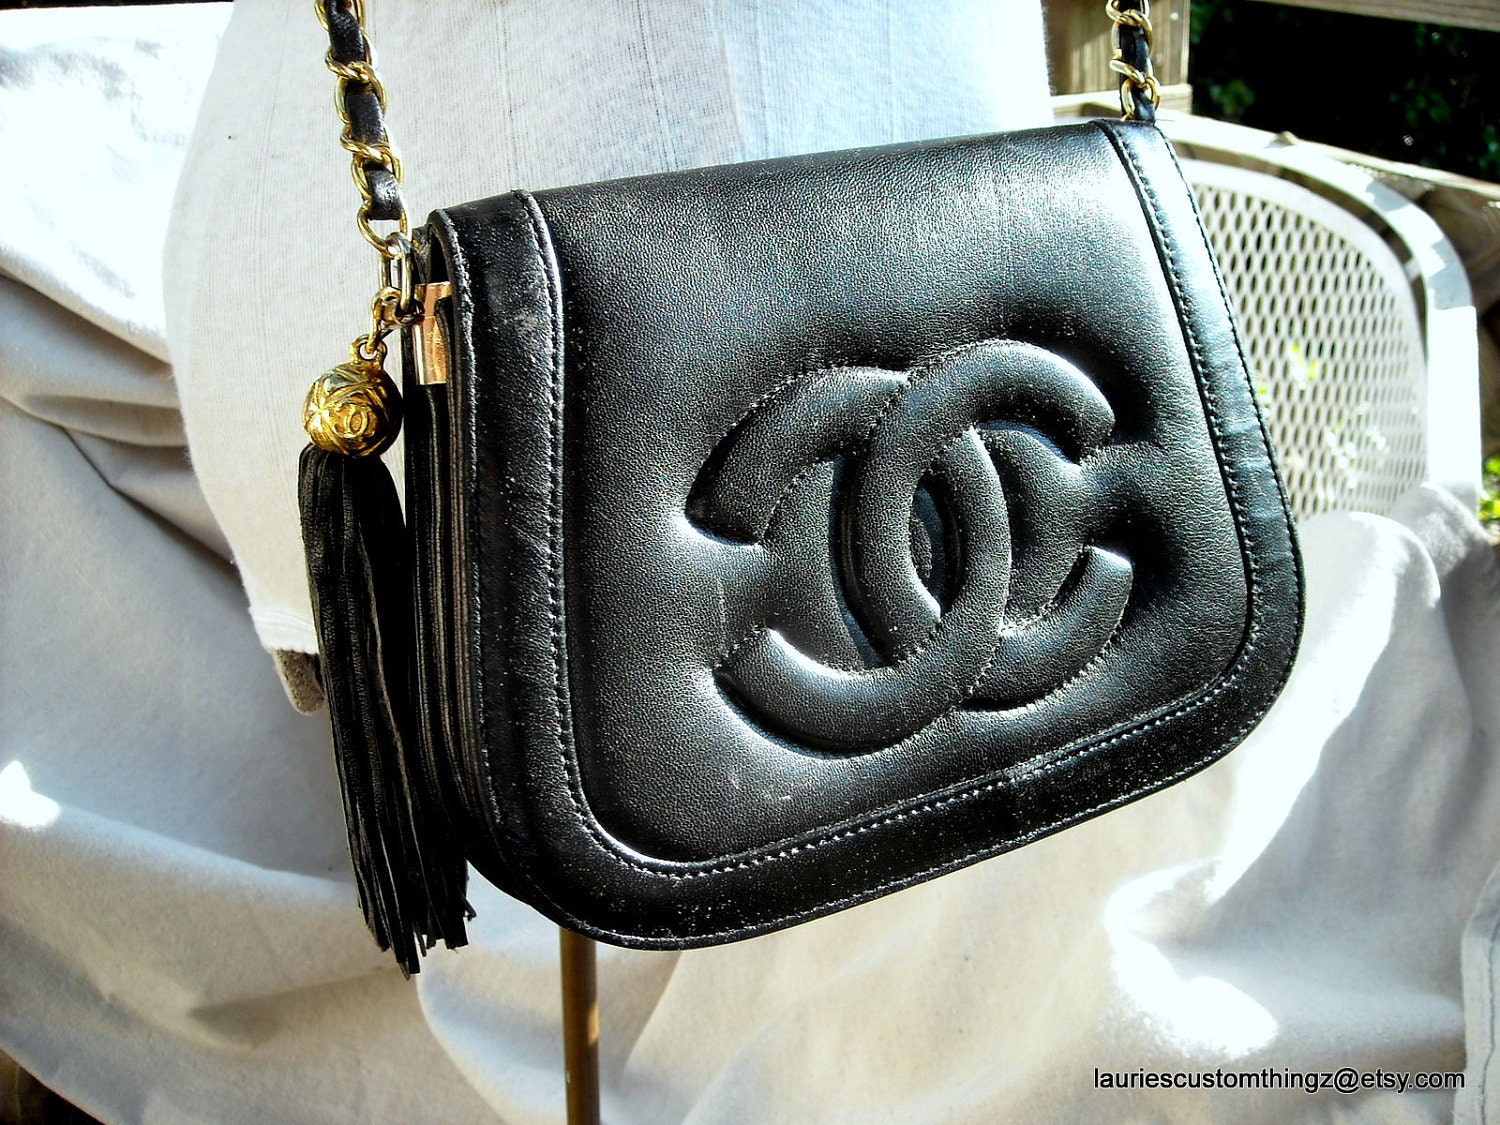 1980s Chanel Tassel Bag an Early CopyCat Leather Double Flap